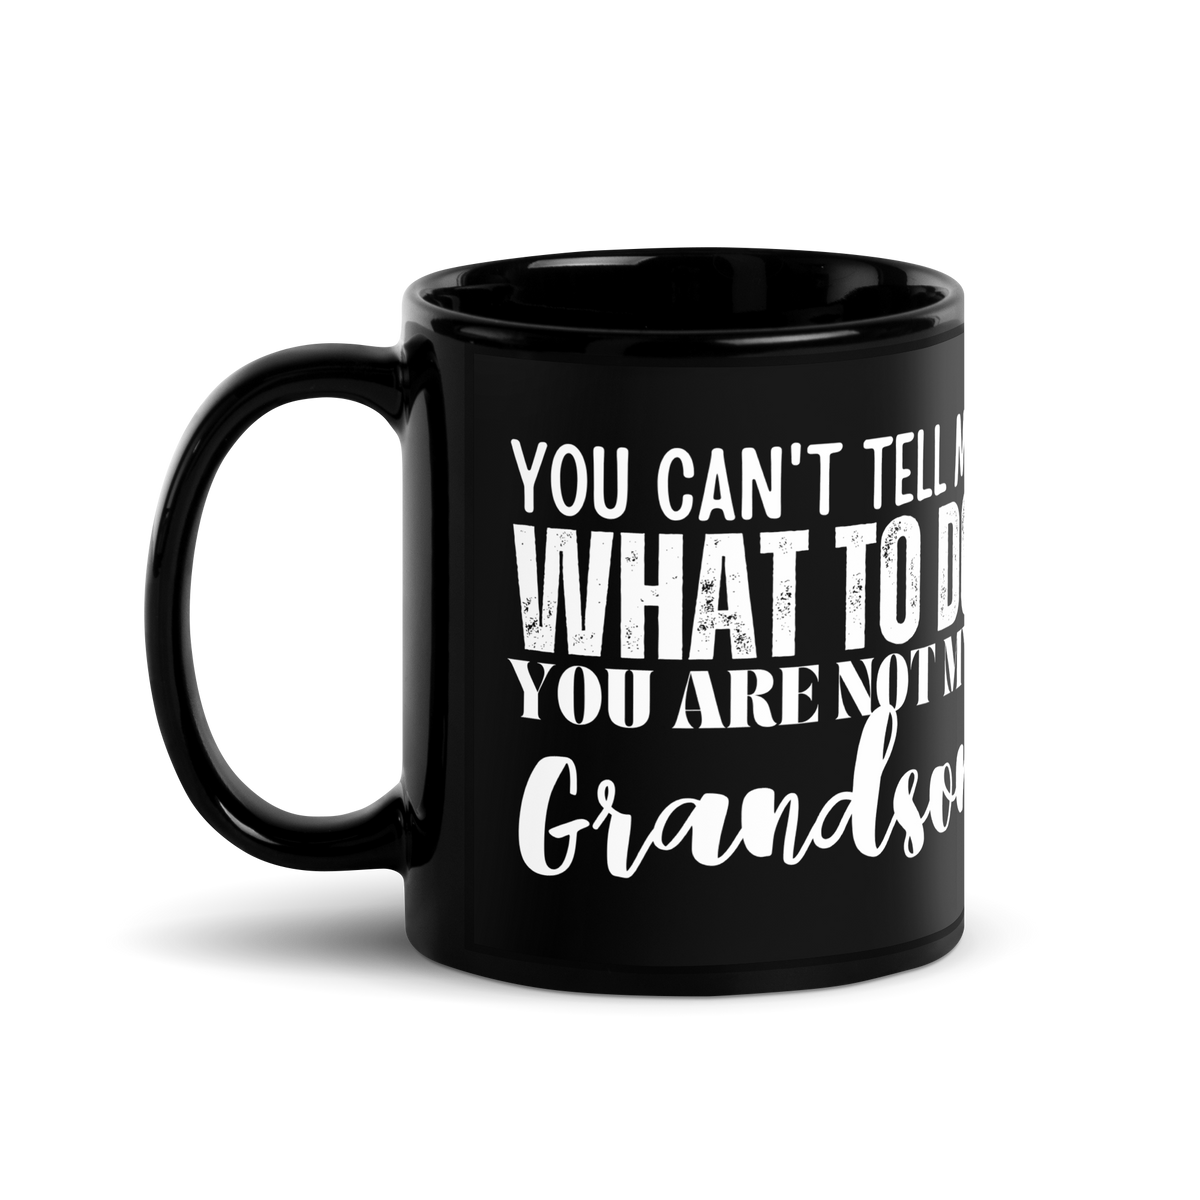 Coffee lovers, Granddad Mug, Granddad coffee mug, granddady tea mug, grandmom mug, gift for her, gift for him, gift for grandmom, gift for granddad, new papa gift, funny grandma mug, funny granddad mug, grandfather mug, you can't tell me what to do you are not my grandson, mug, coffee mug, cup, tea mug